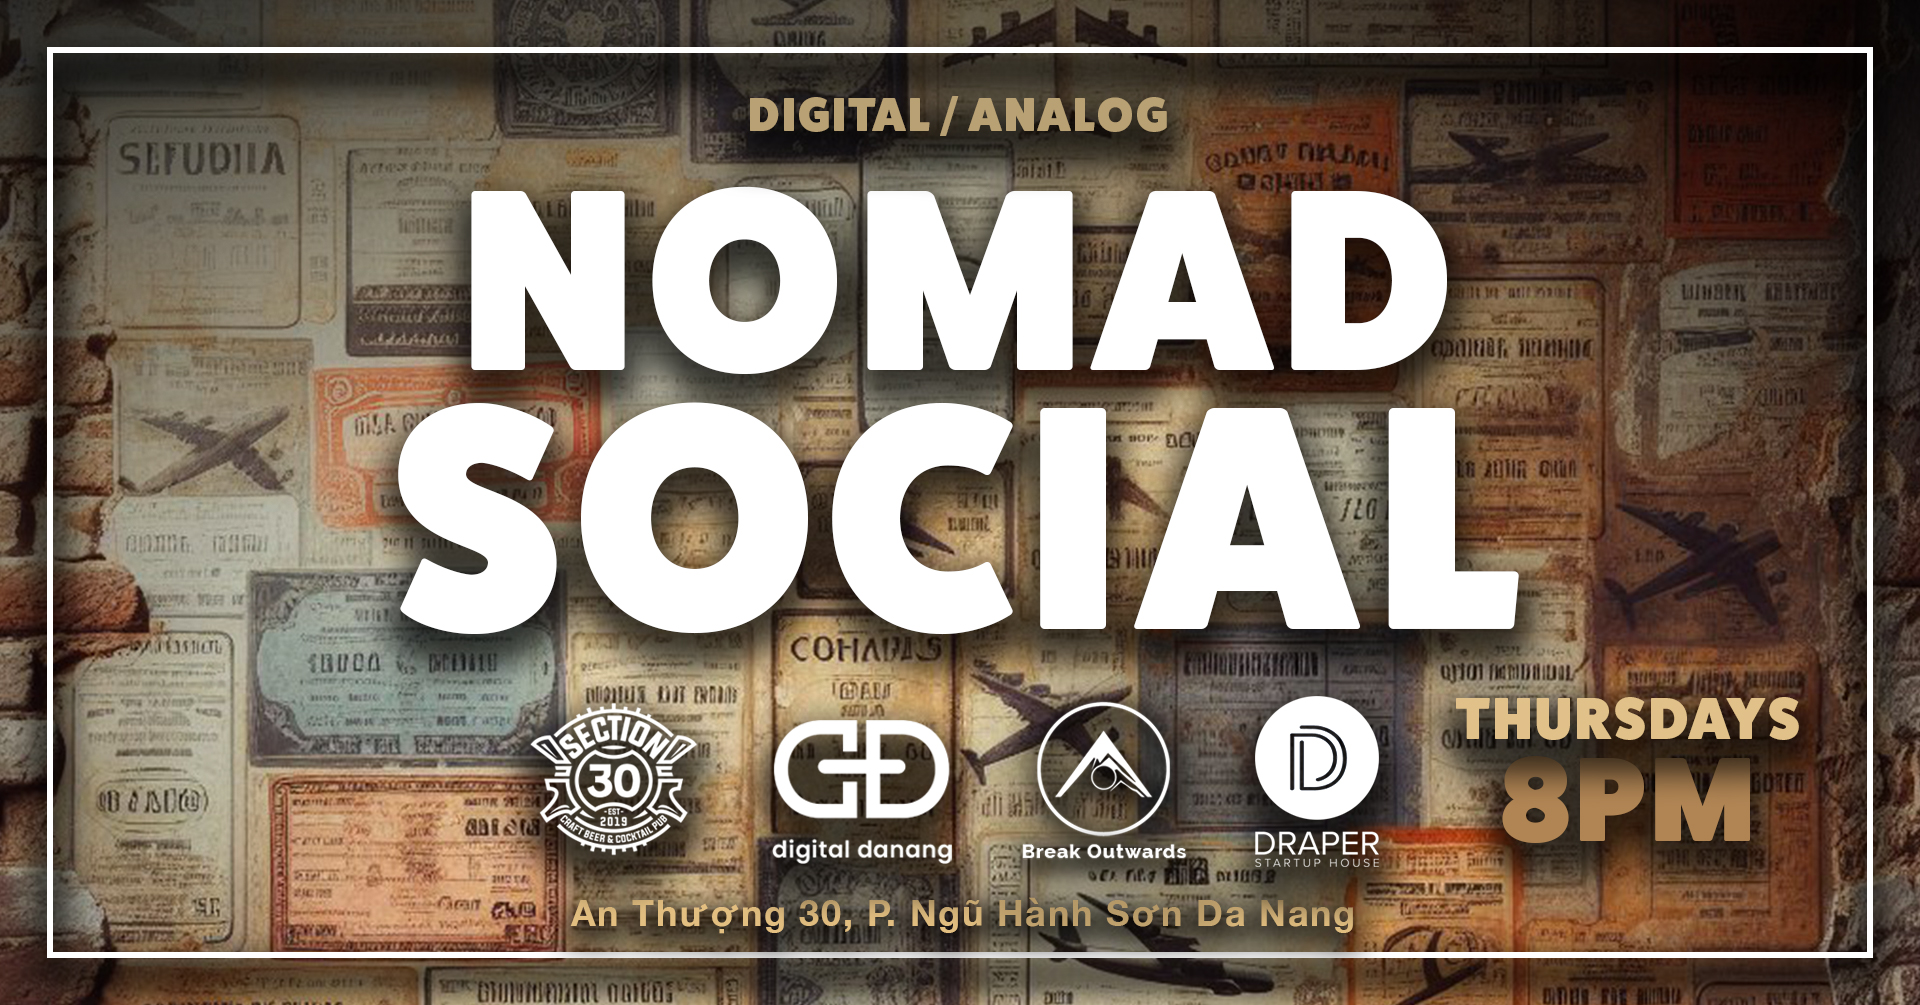 Digital Analog Nomad Social